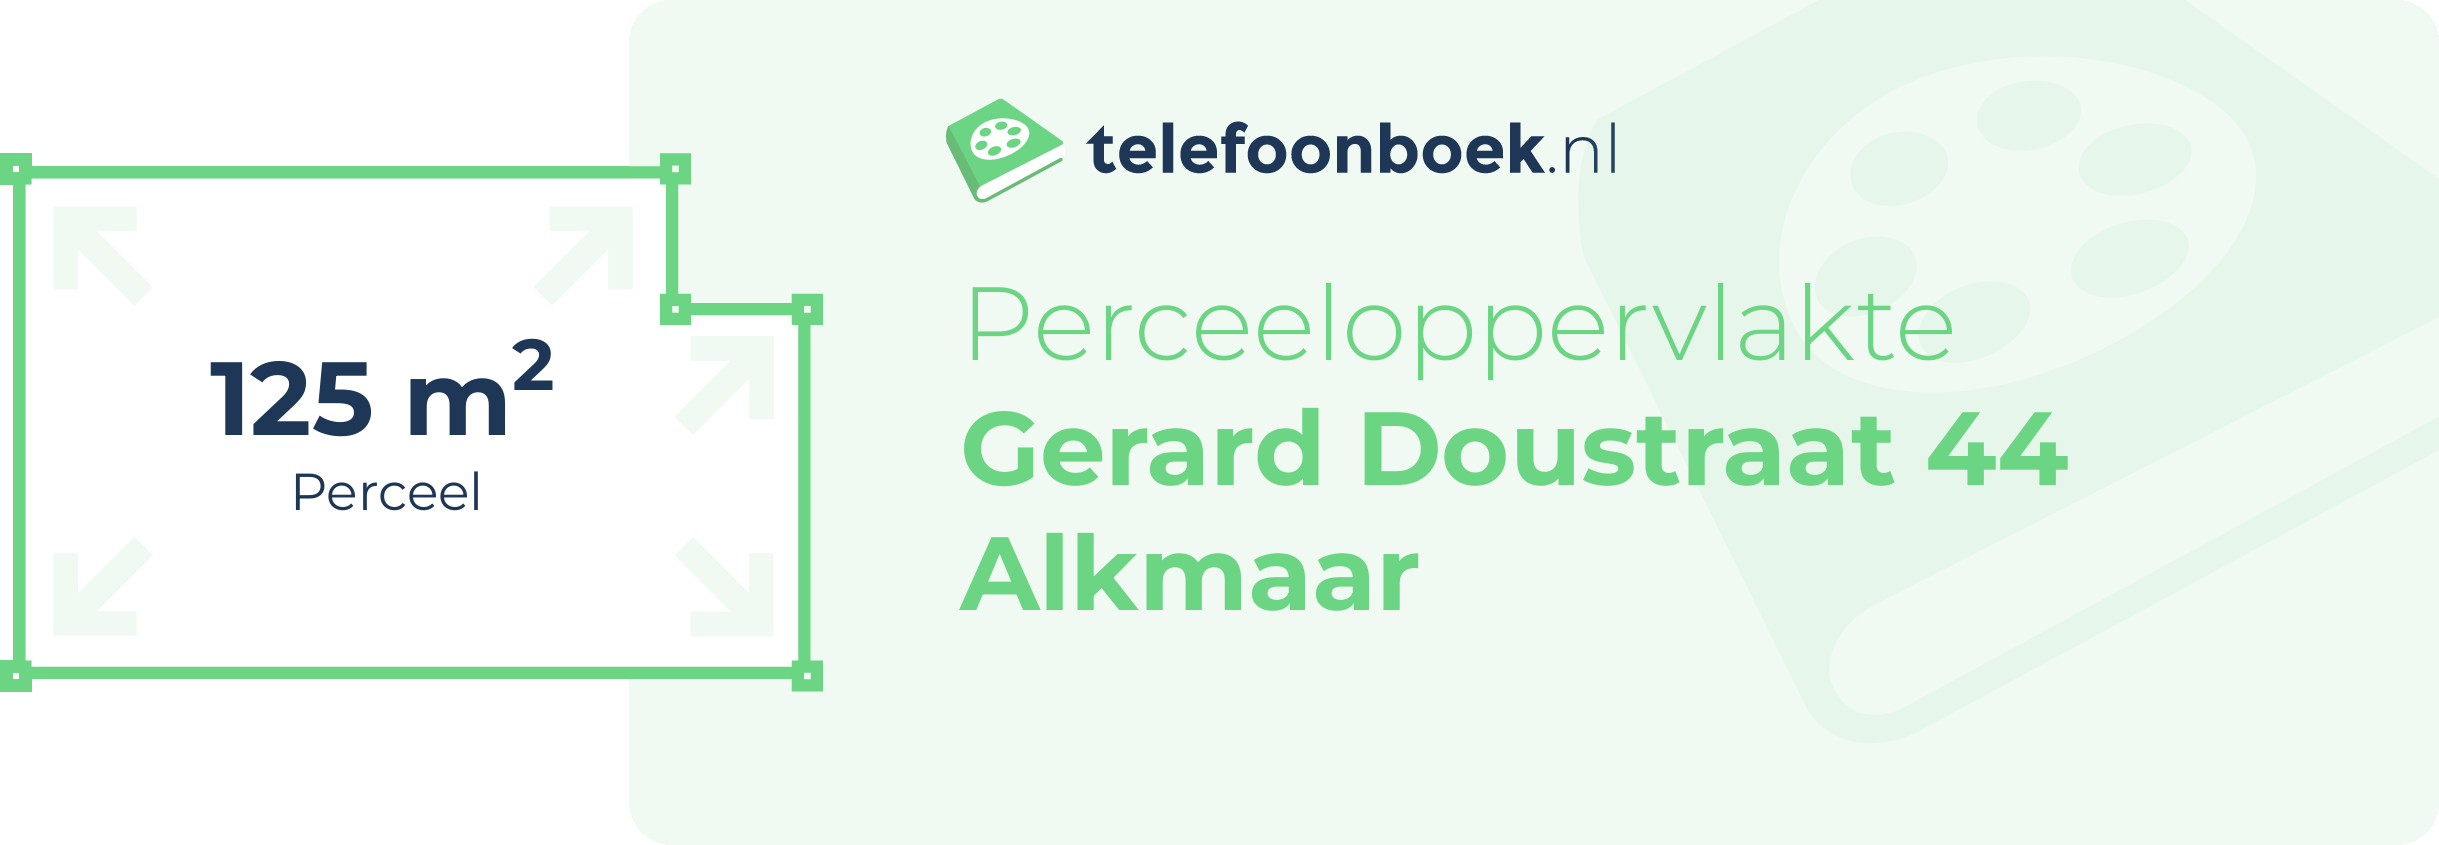 Perceeloppervlakte Gerard Doustraat 44 Alkmaar